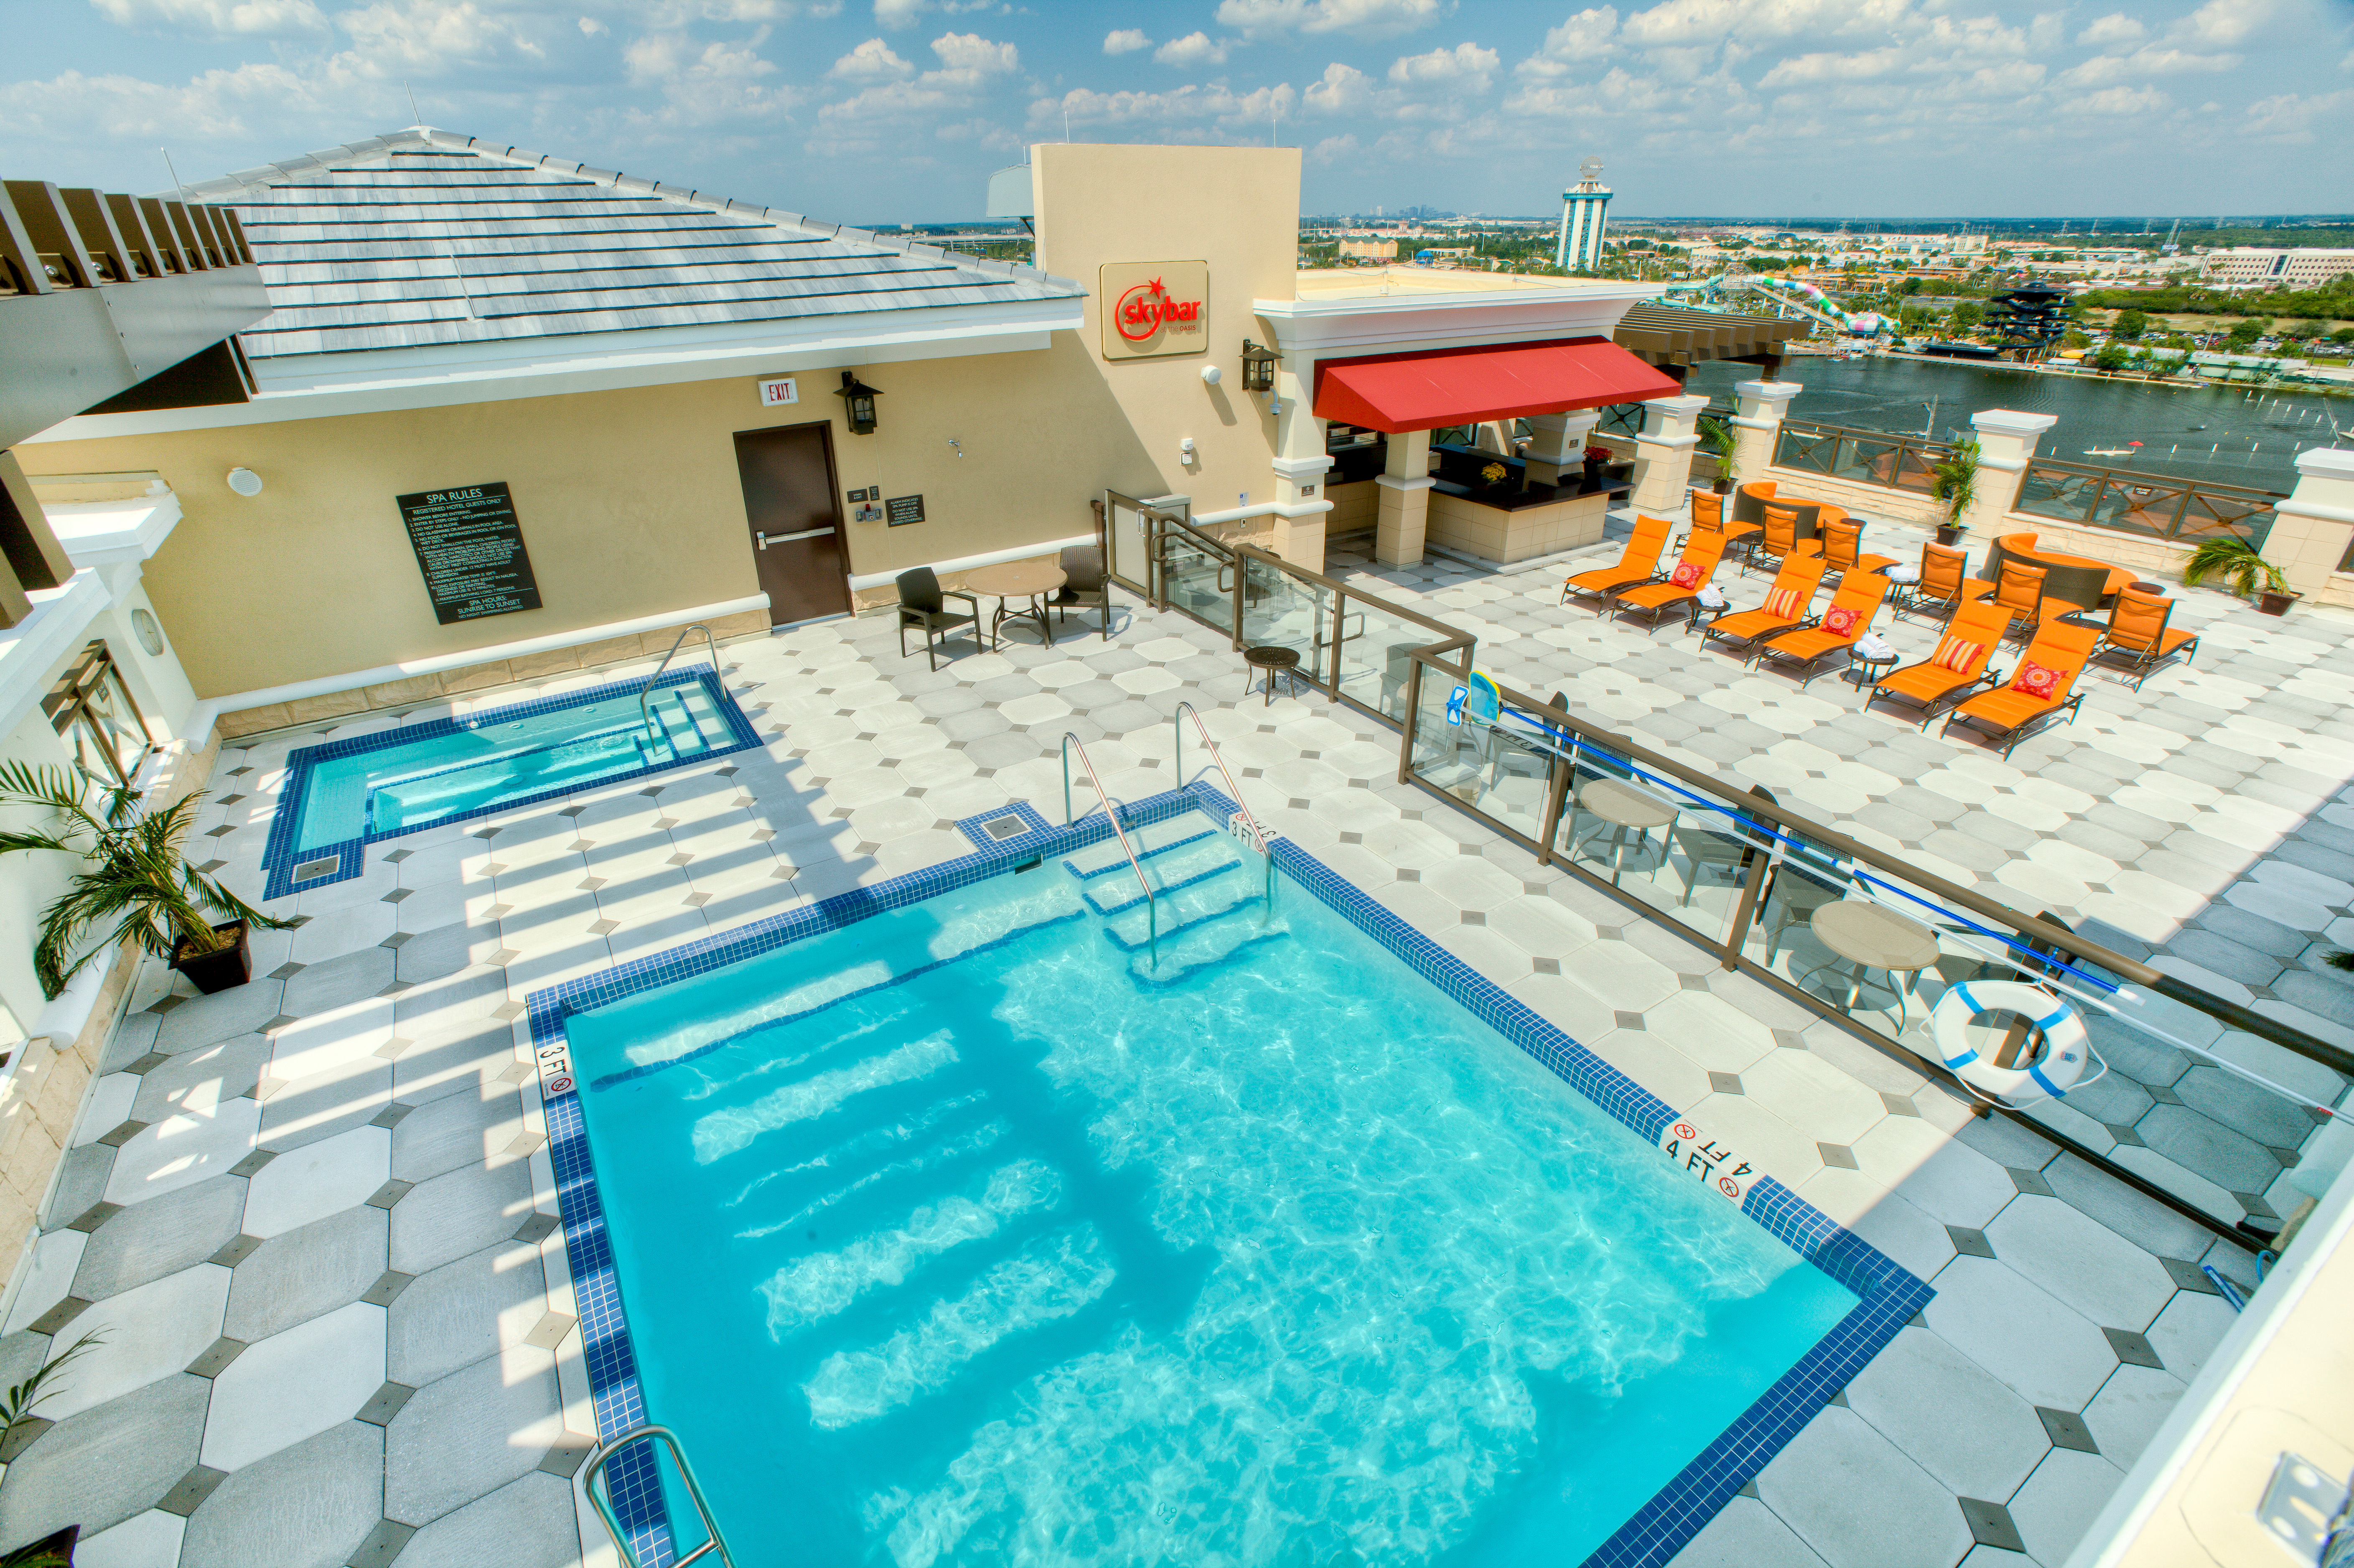 Ramada International Drive Orlando Florida Bedroom Rooftop pool area